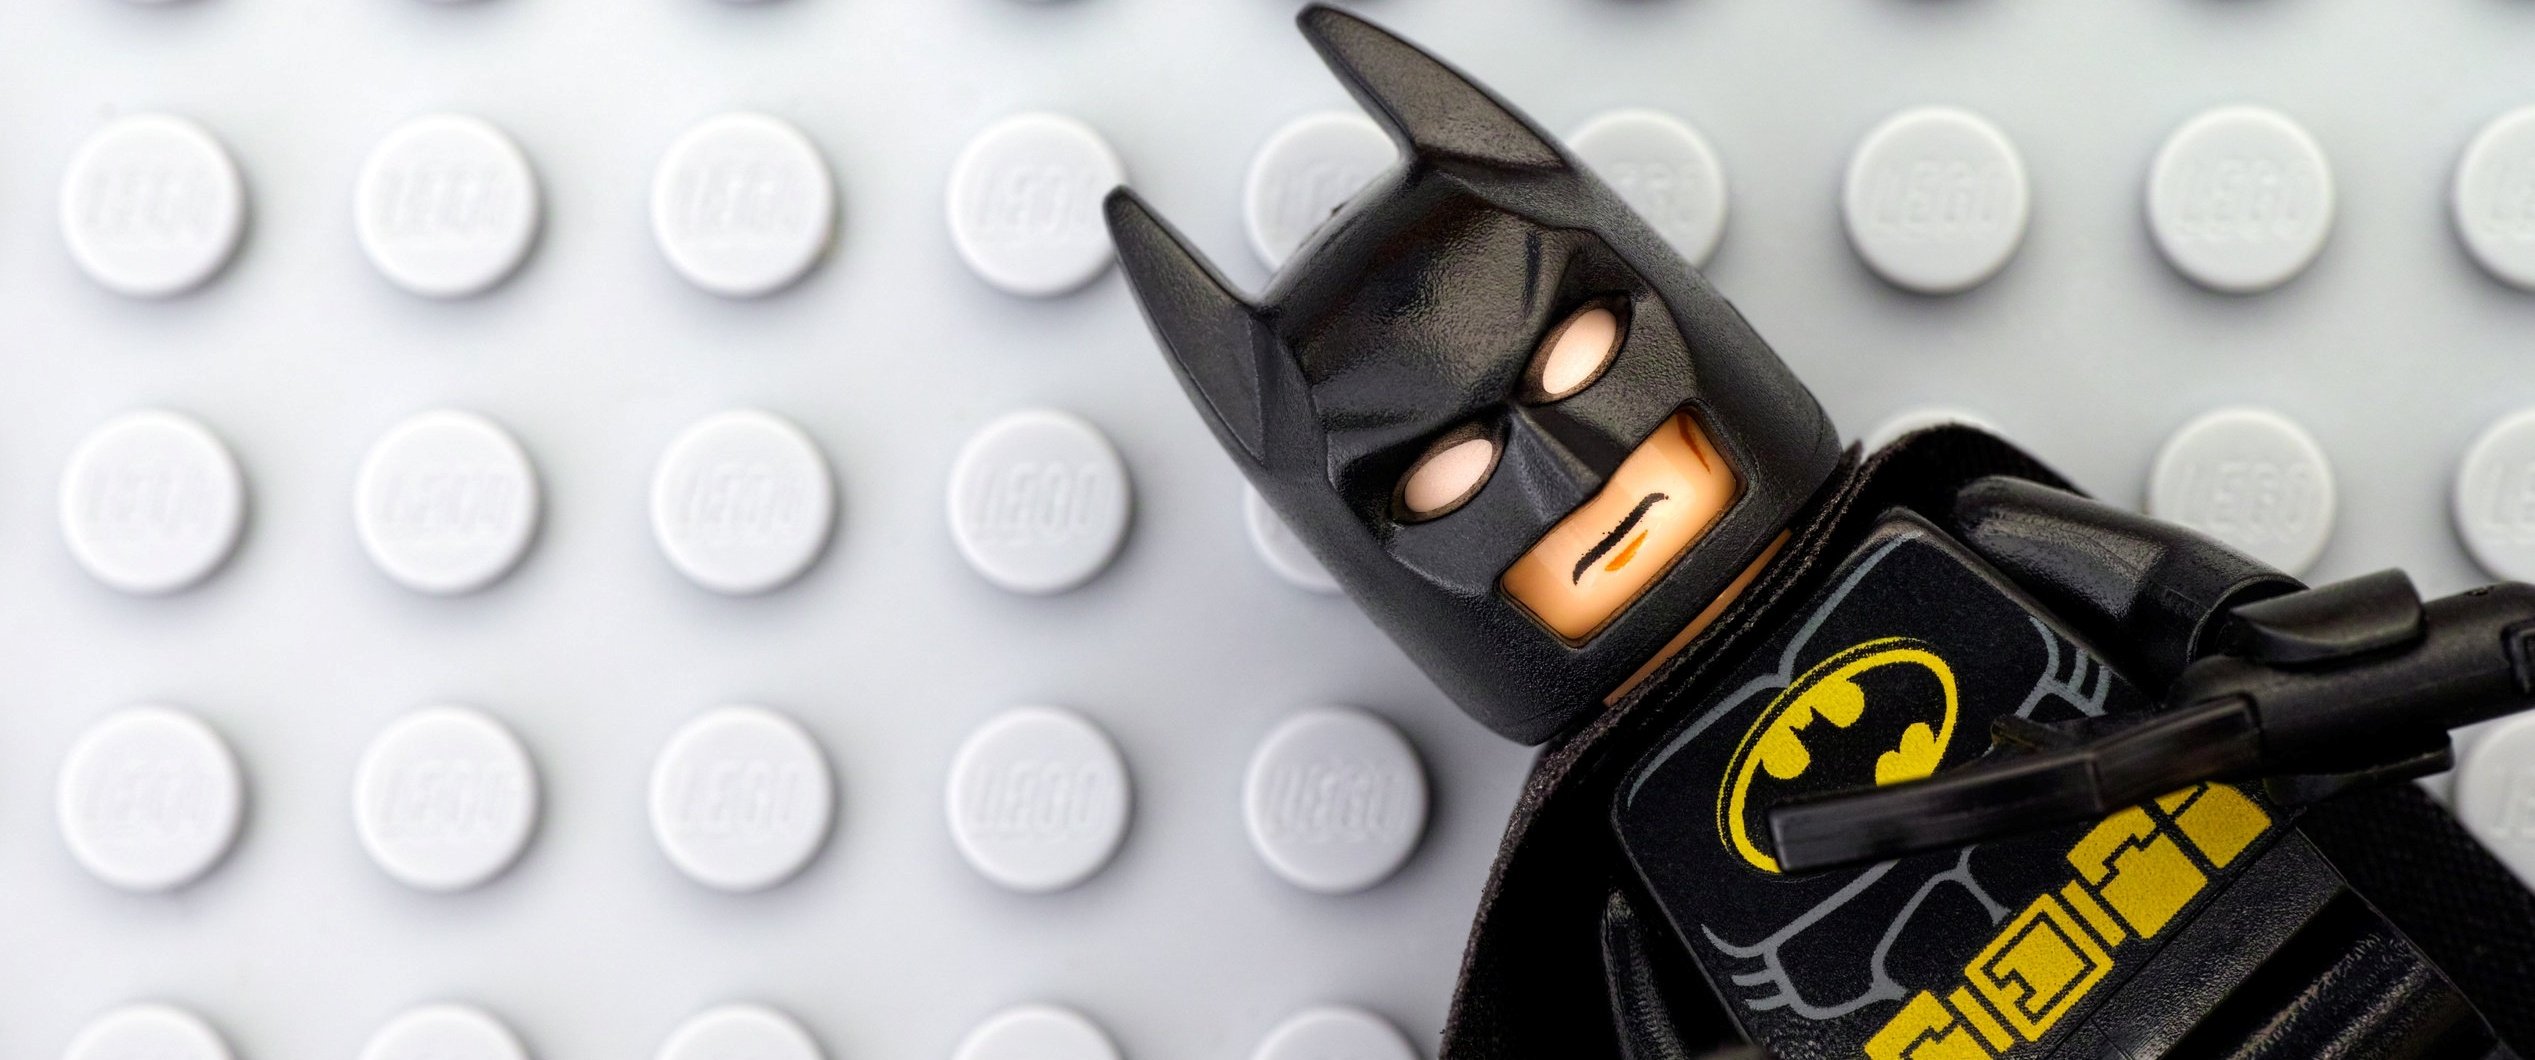 Lego Batman en placa base gris